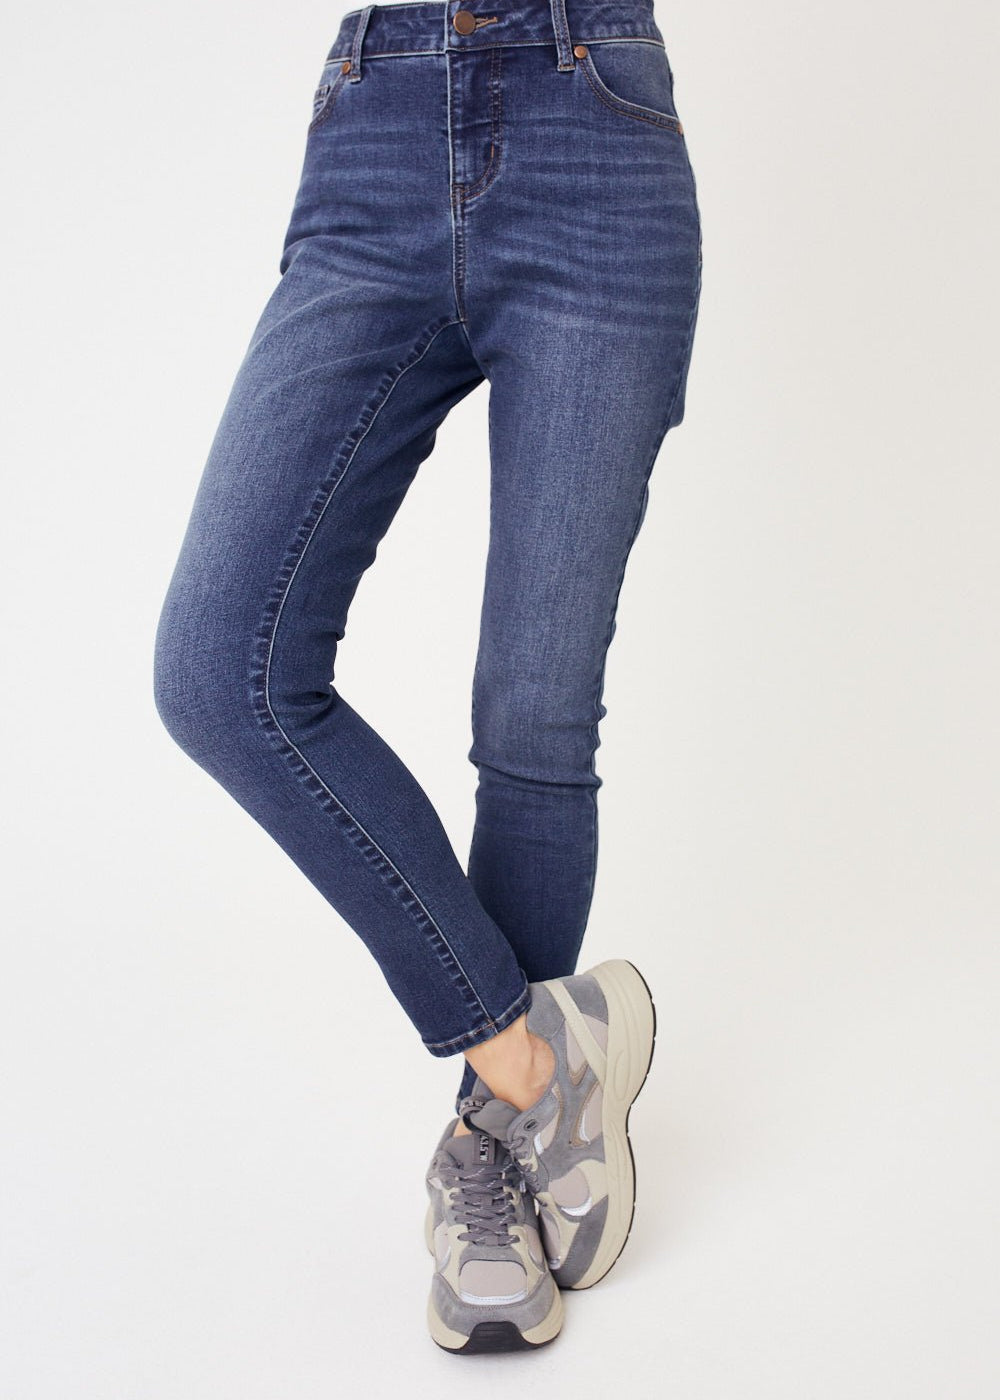 Westport Signature Mid-Rise Bootcut Jeans - Petite